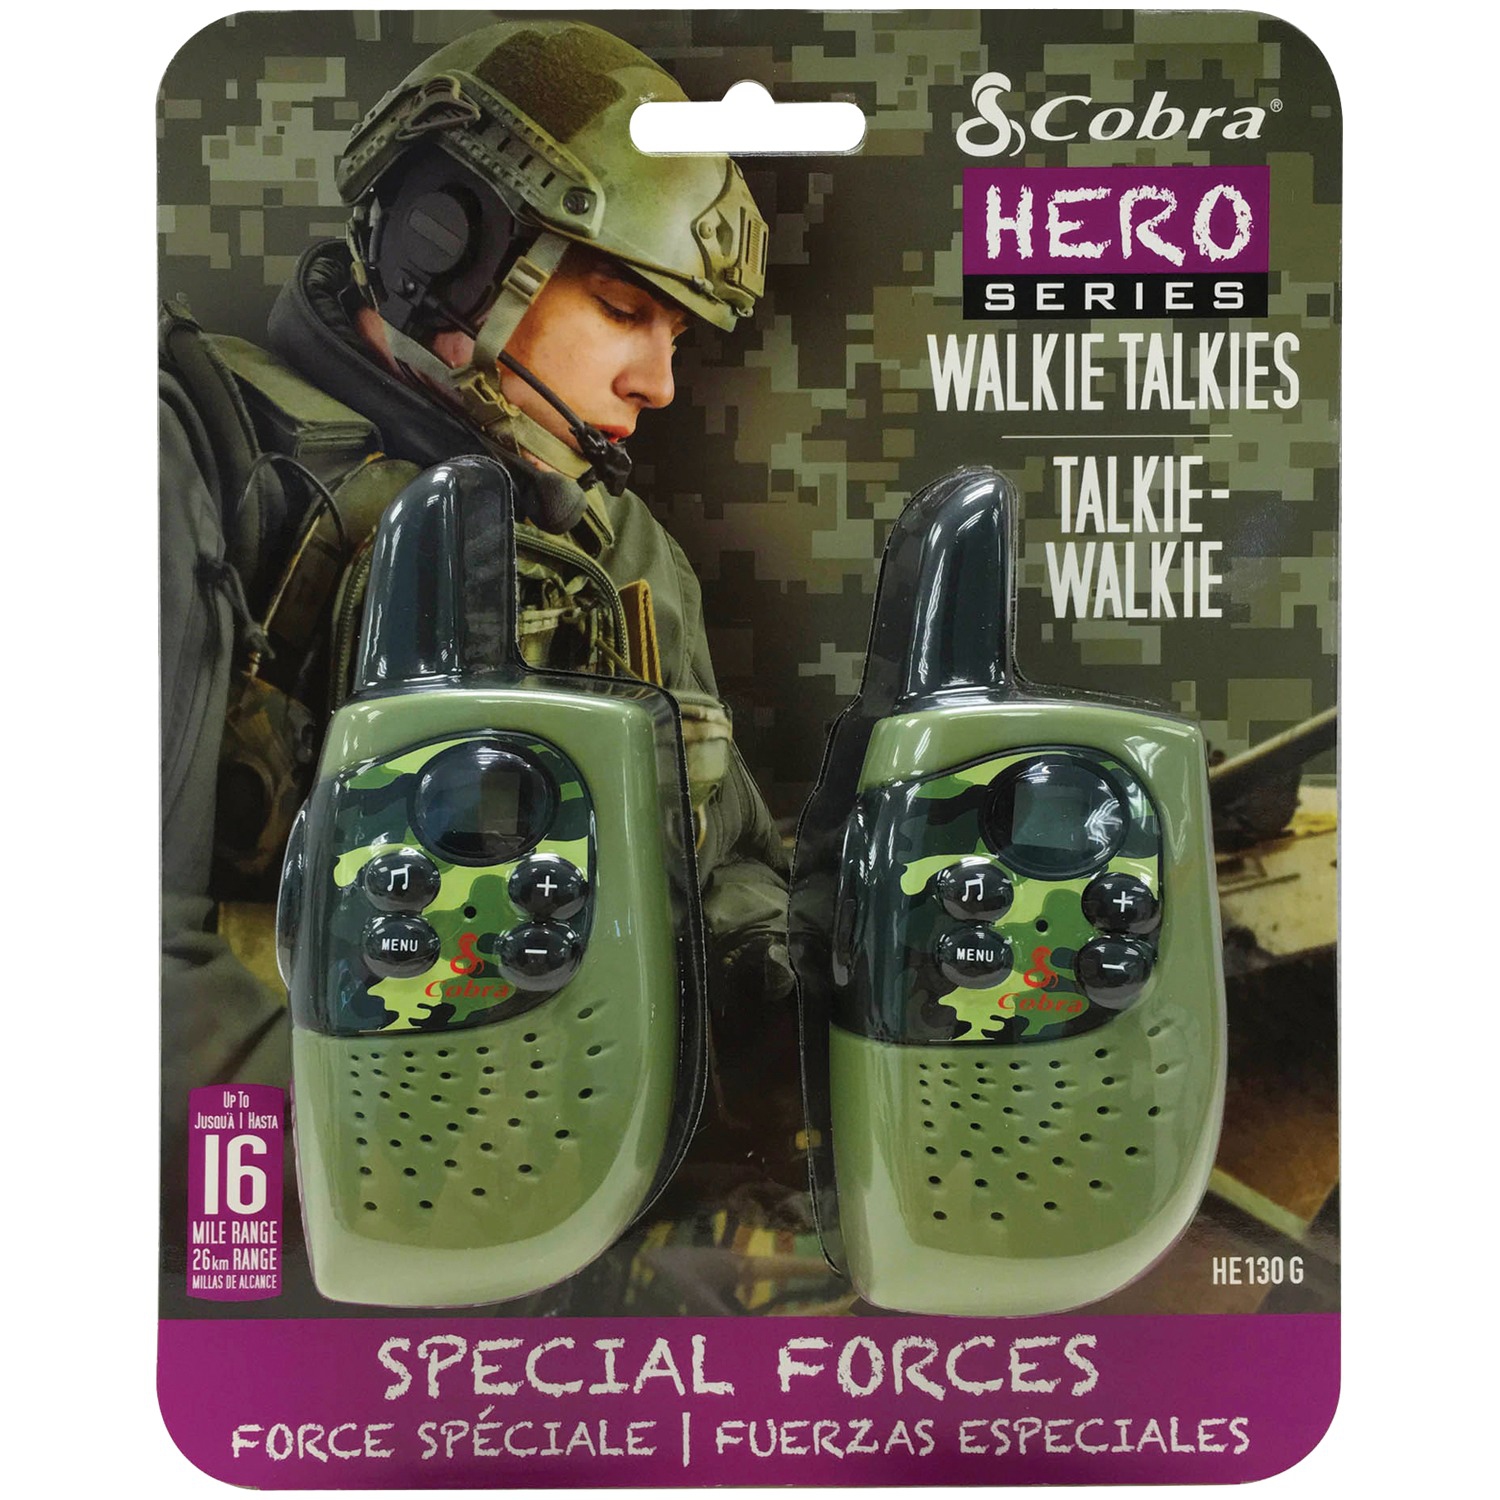 Cobra Hero Series Walkie Talkies HE130 Special Forces Green 22 Channels